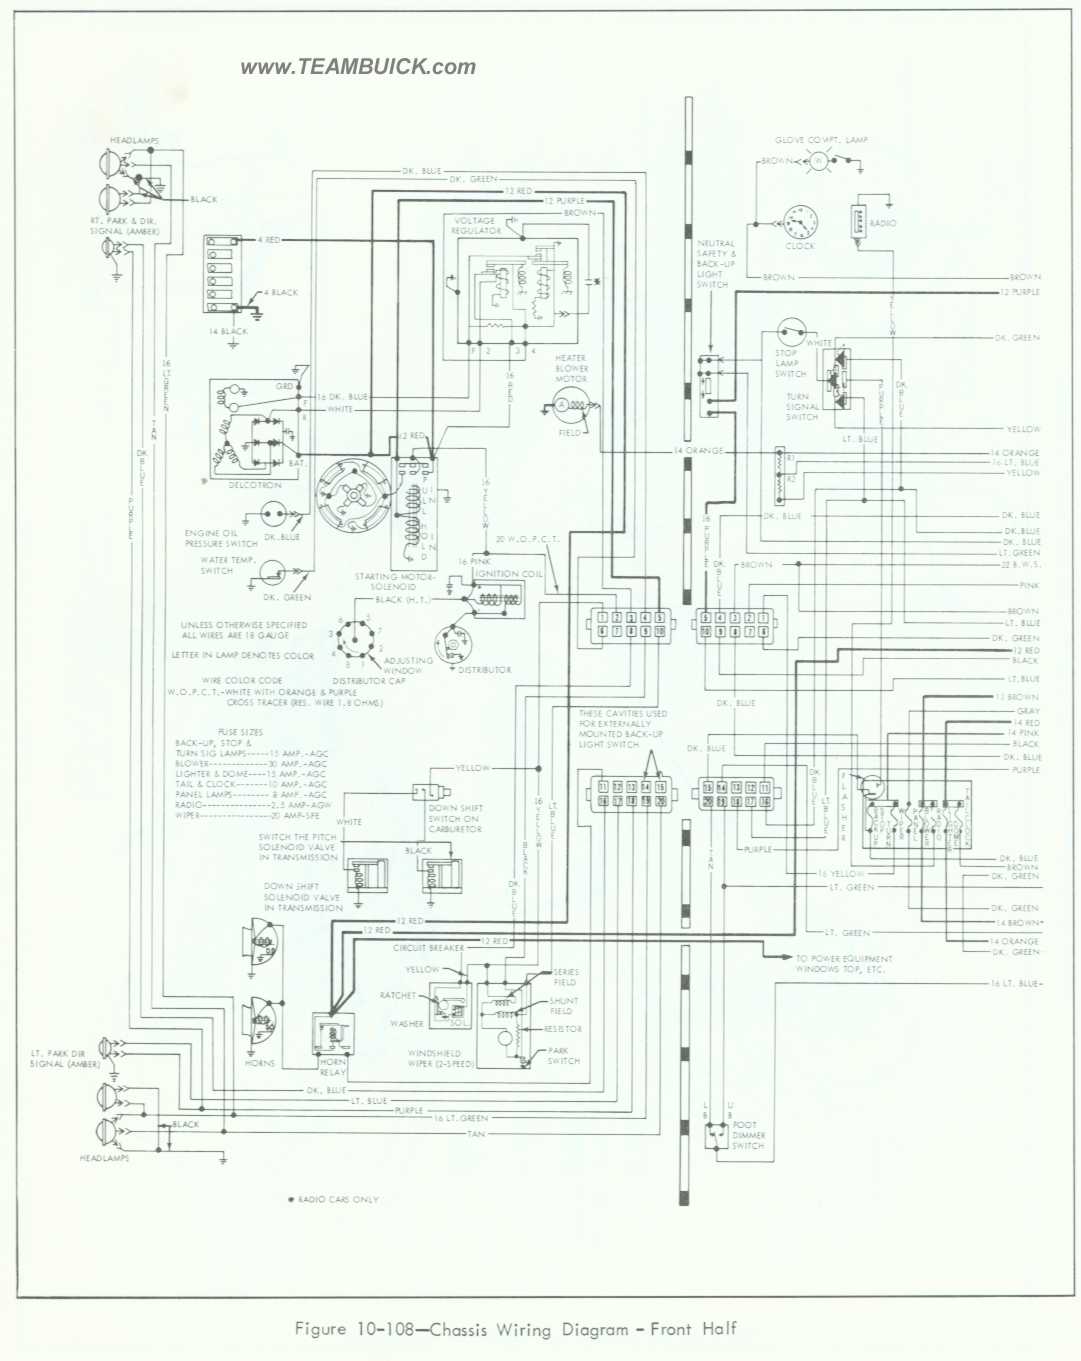 1964 Buick Special - Skylark Wiring Diagram, Front Half